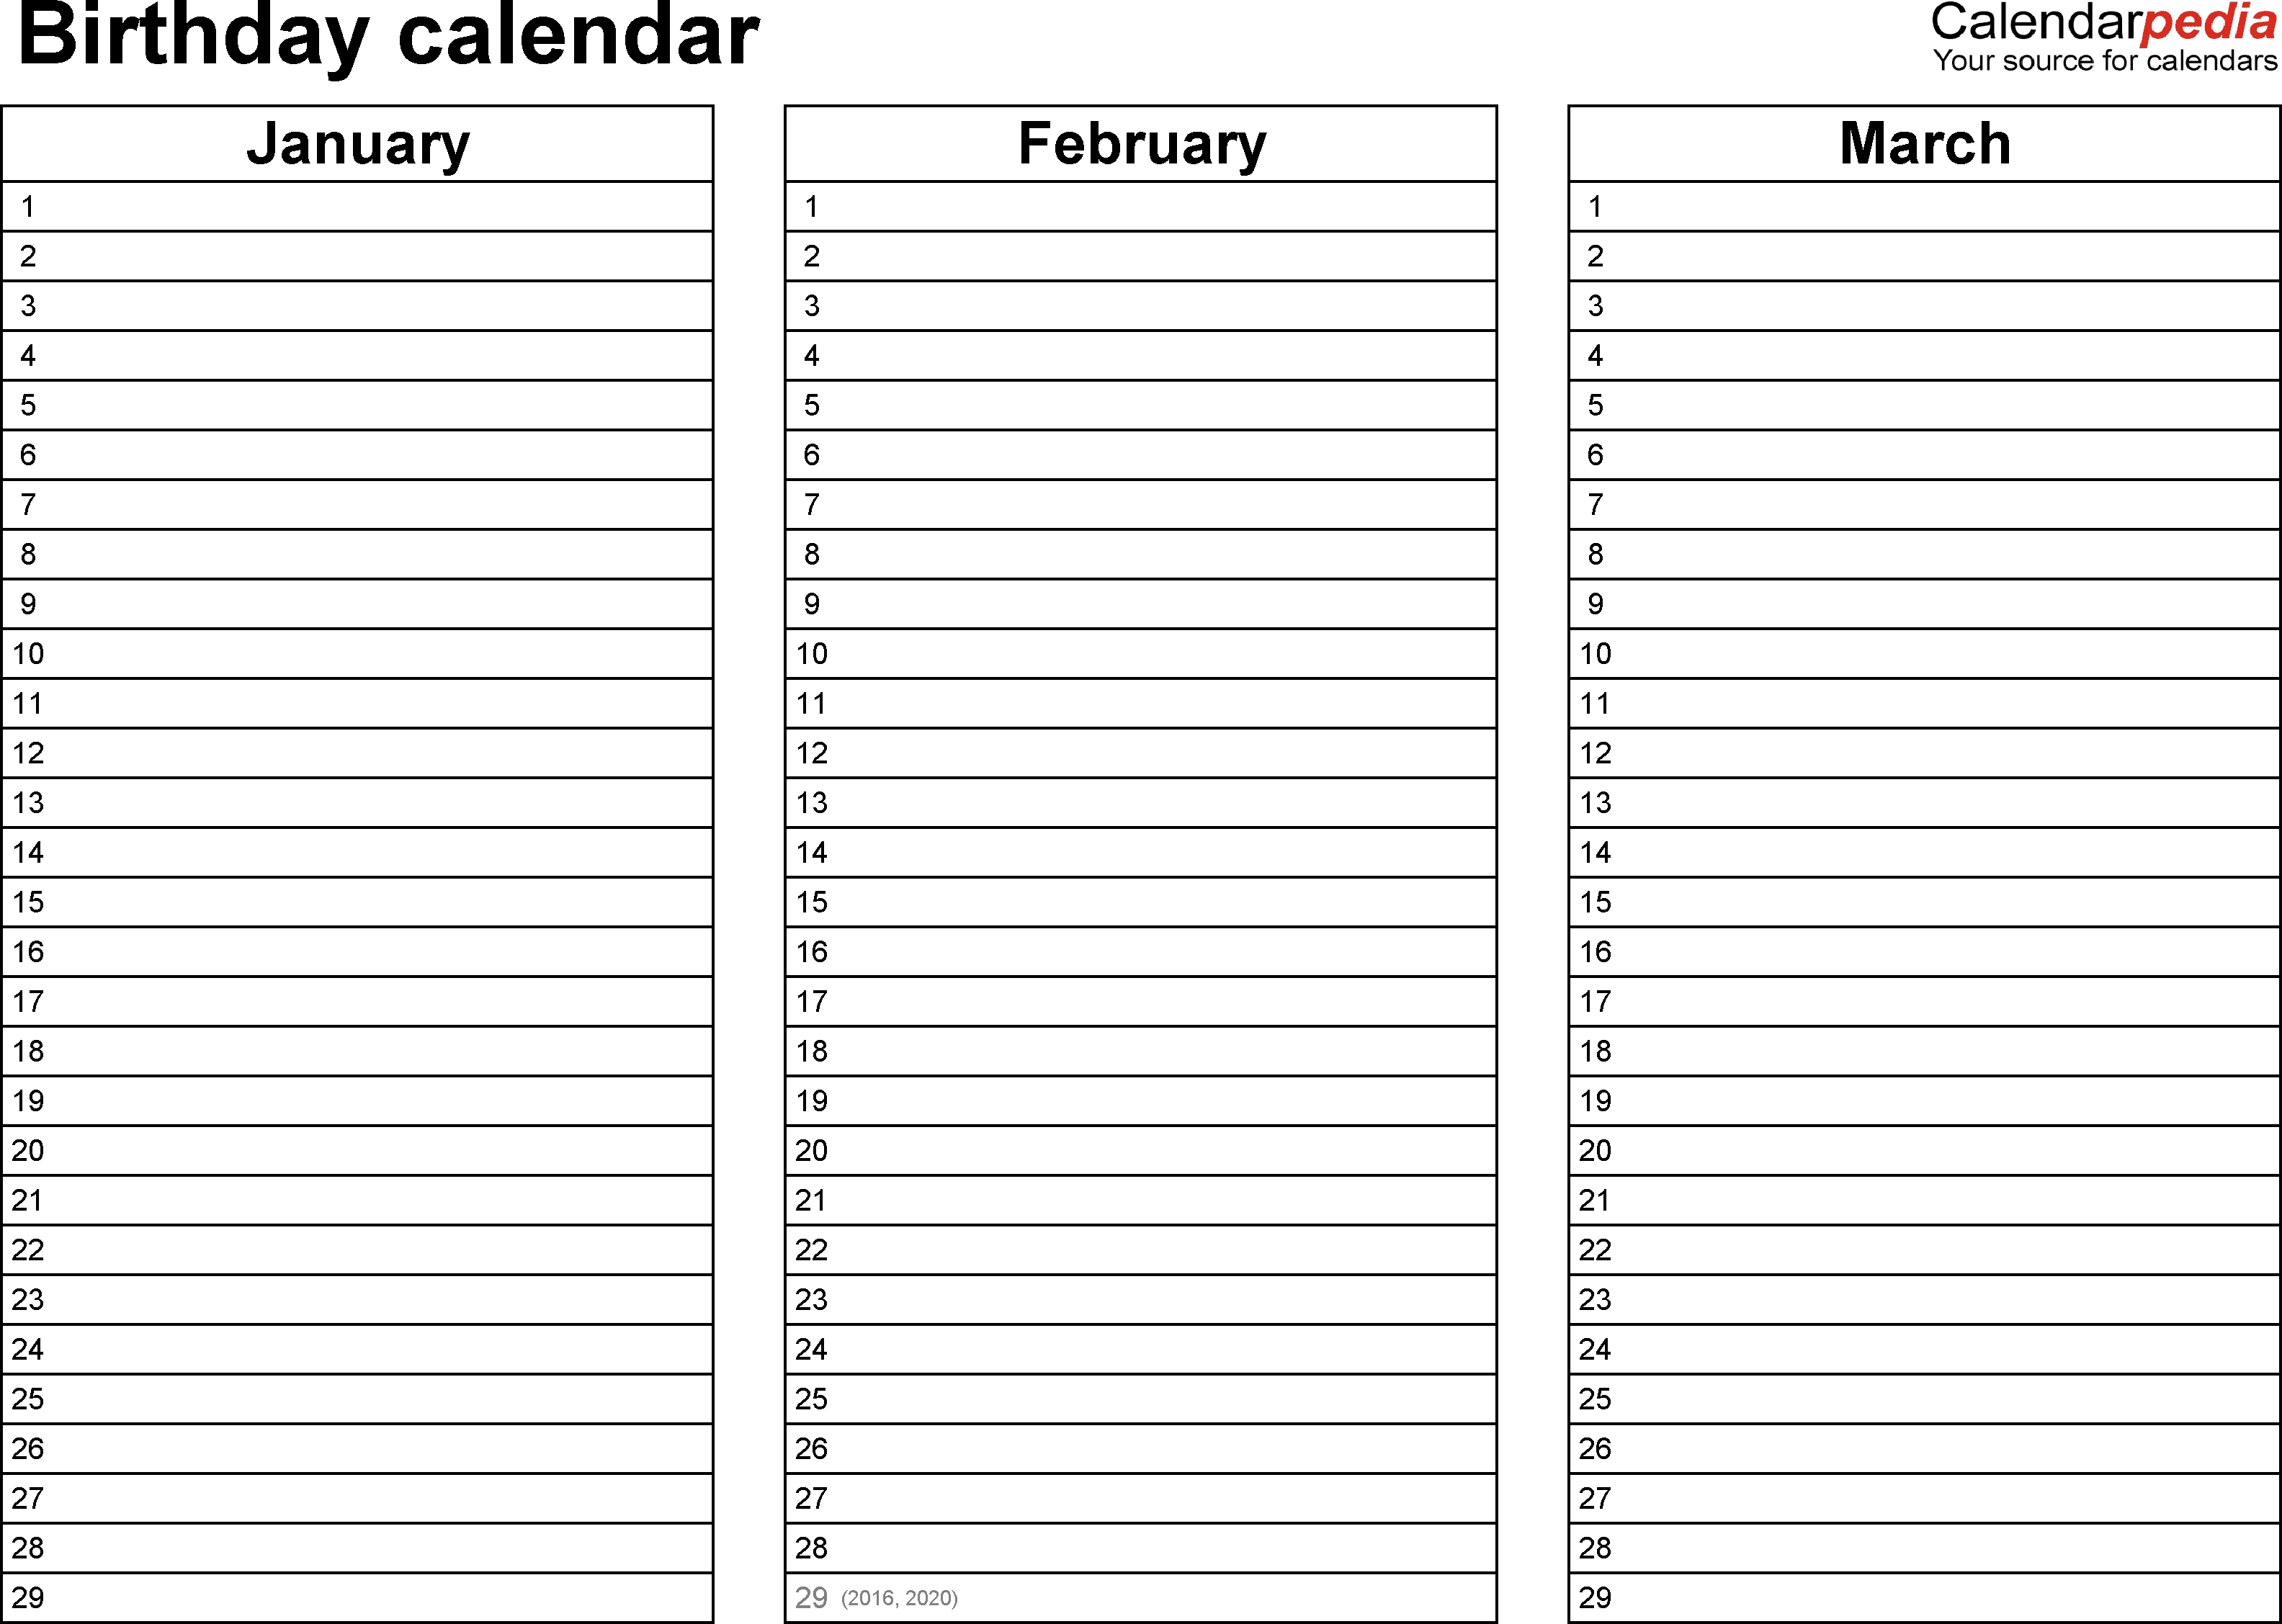 Birthday Calendars - 7 Free Printable Word Templates Calendar List Template Word